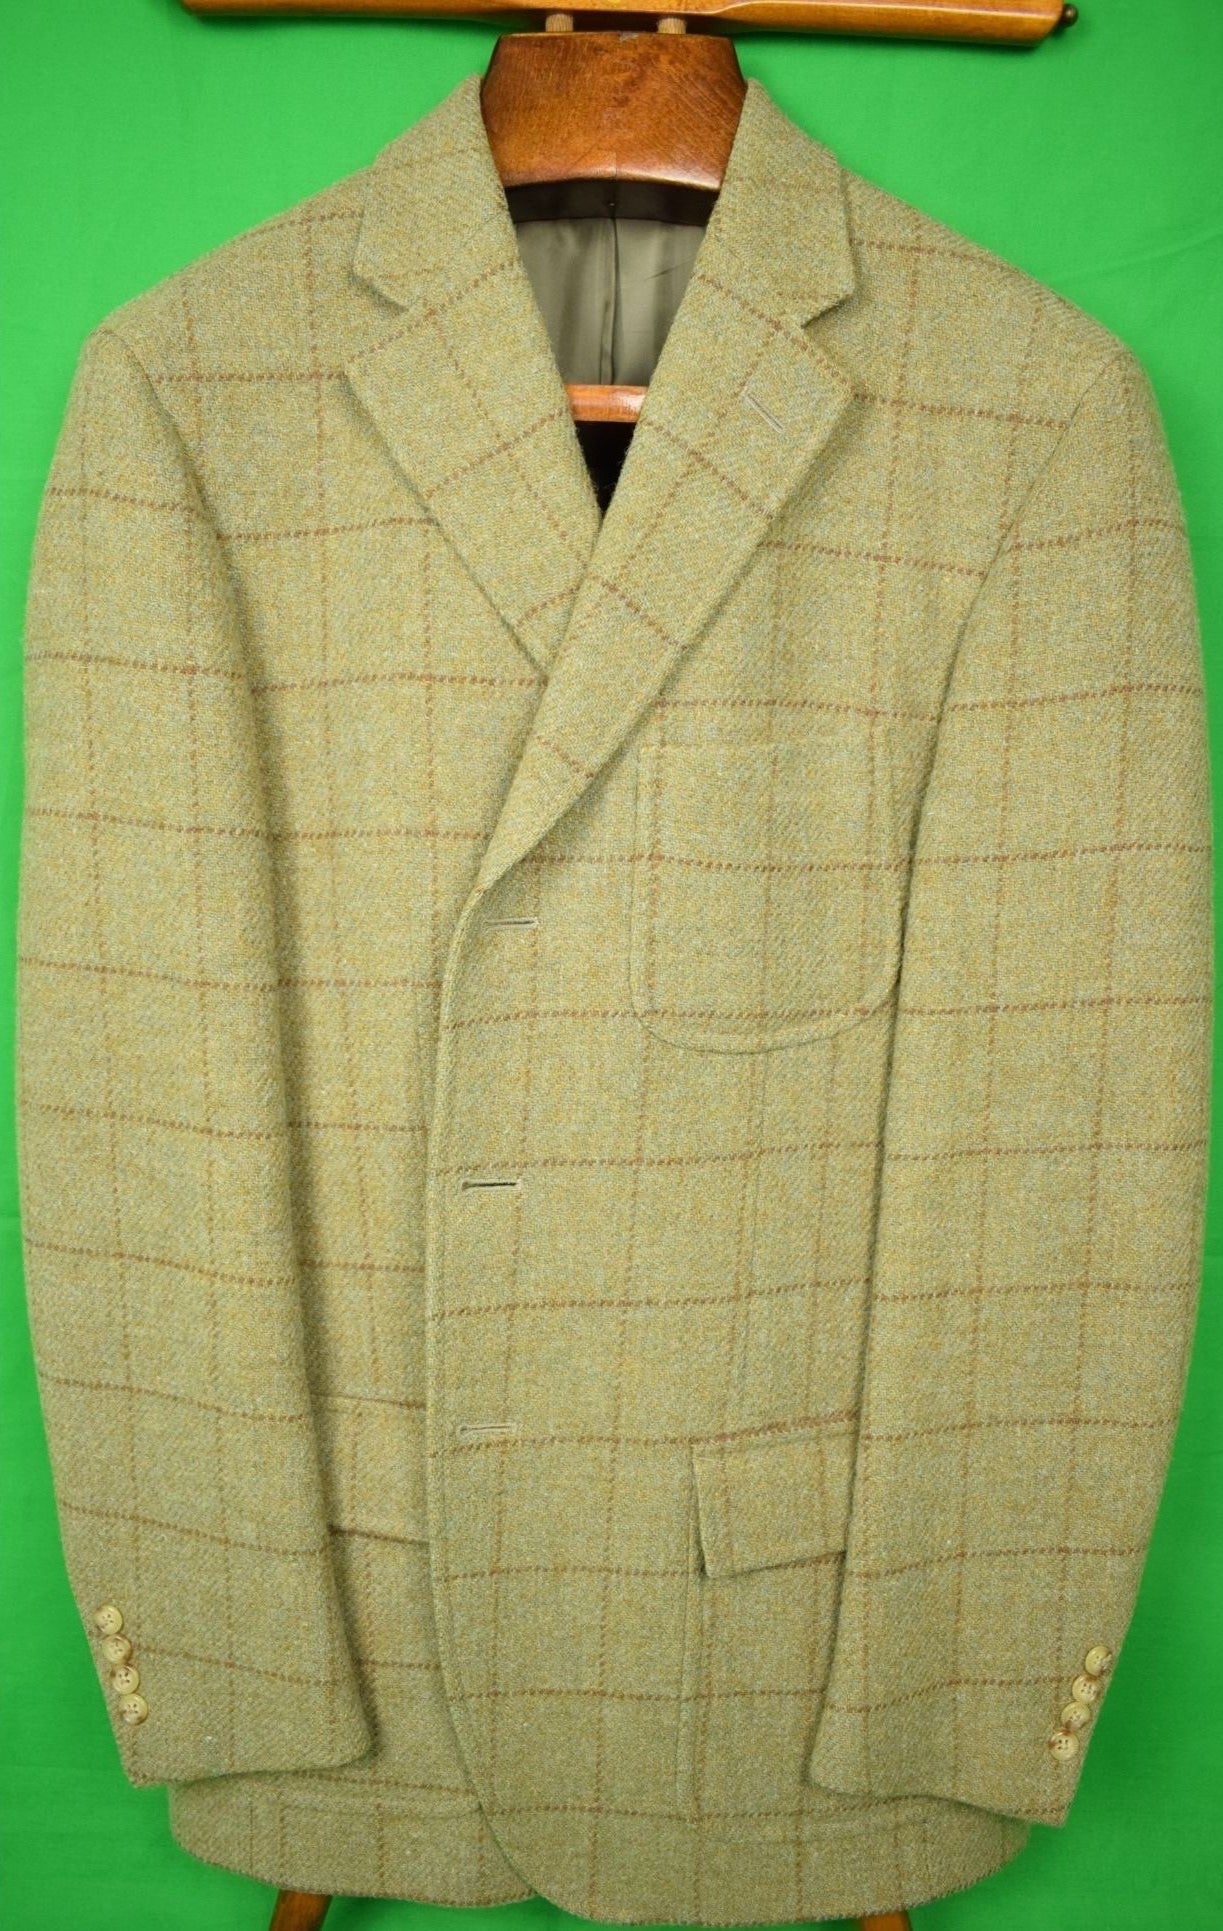 Polo Ralph Lauren Blanket Plaid Italian Wool Tweed Jacket